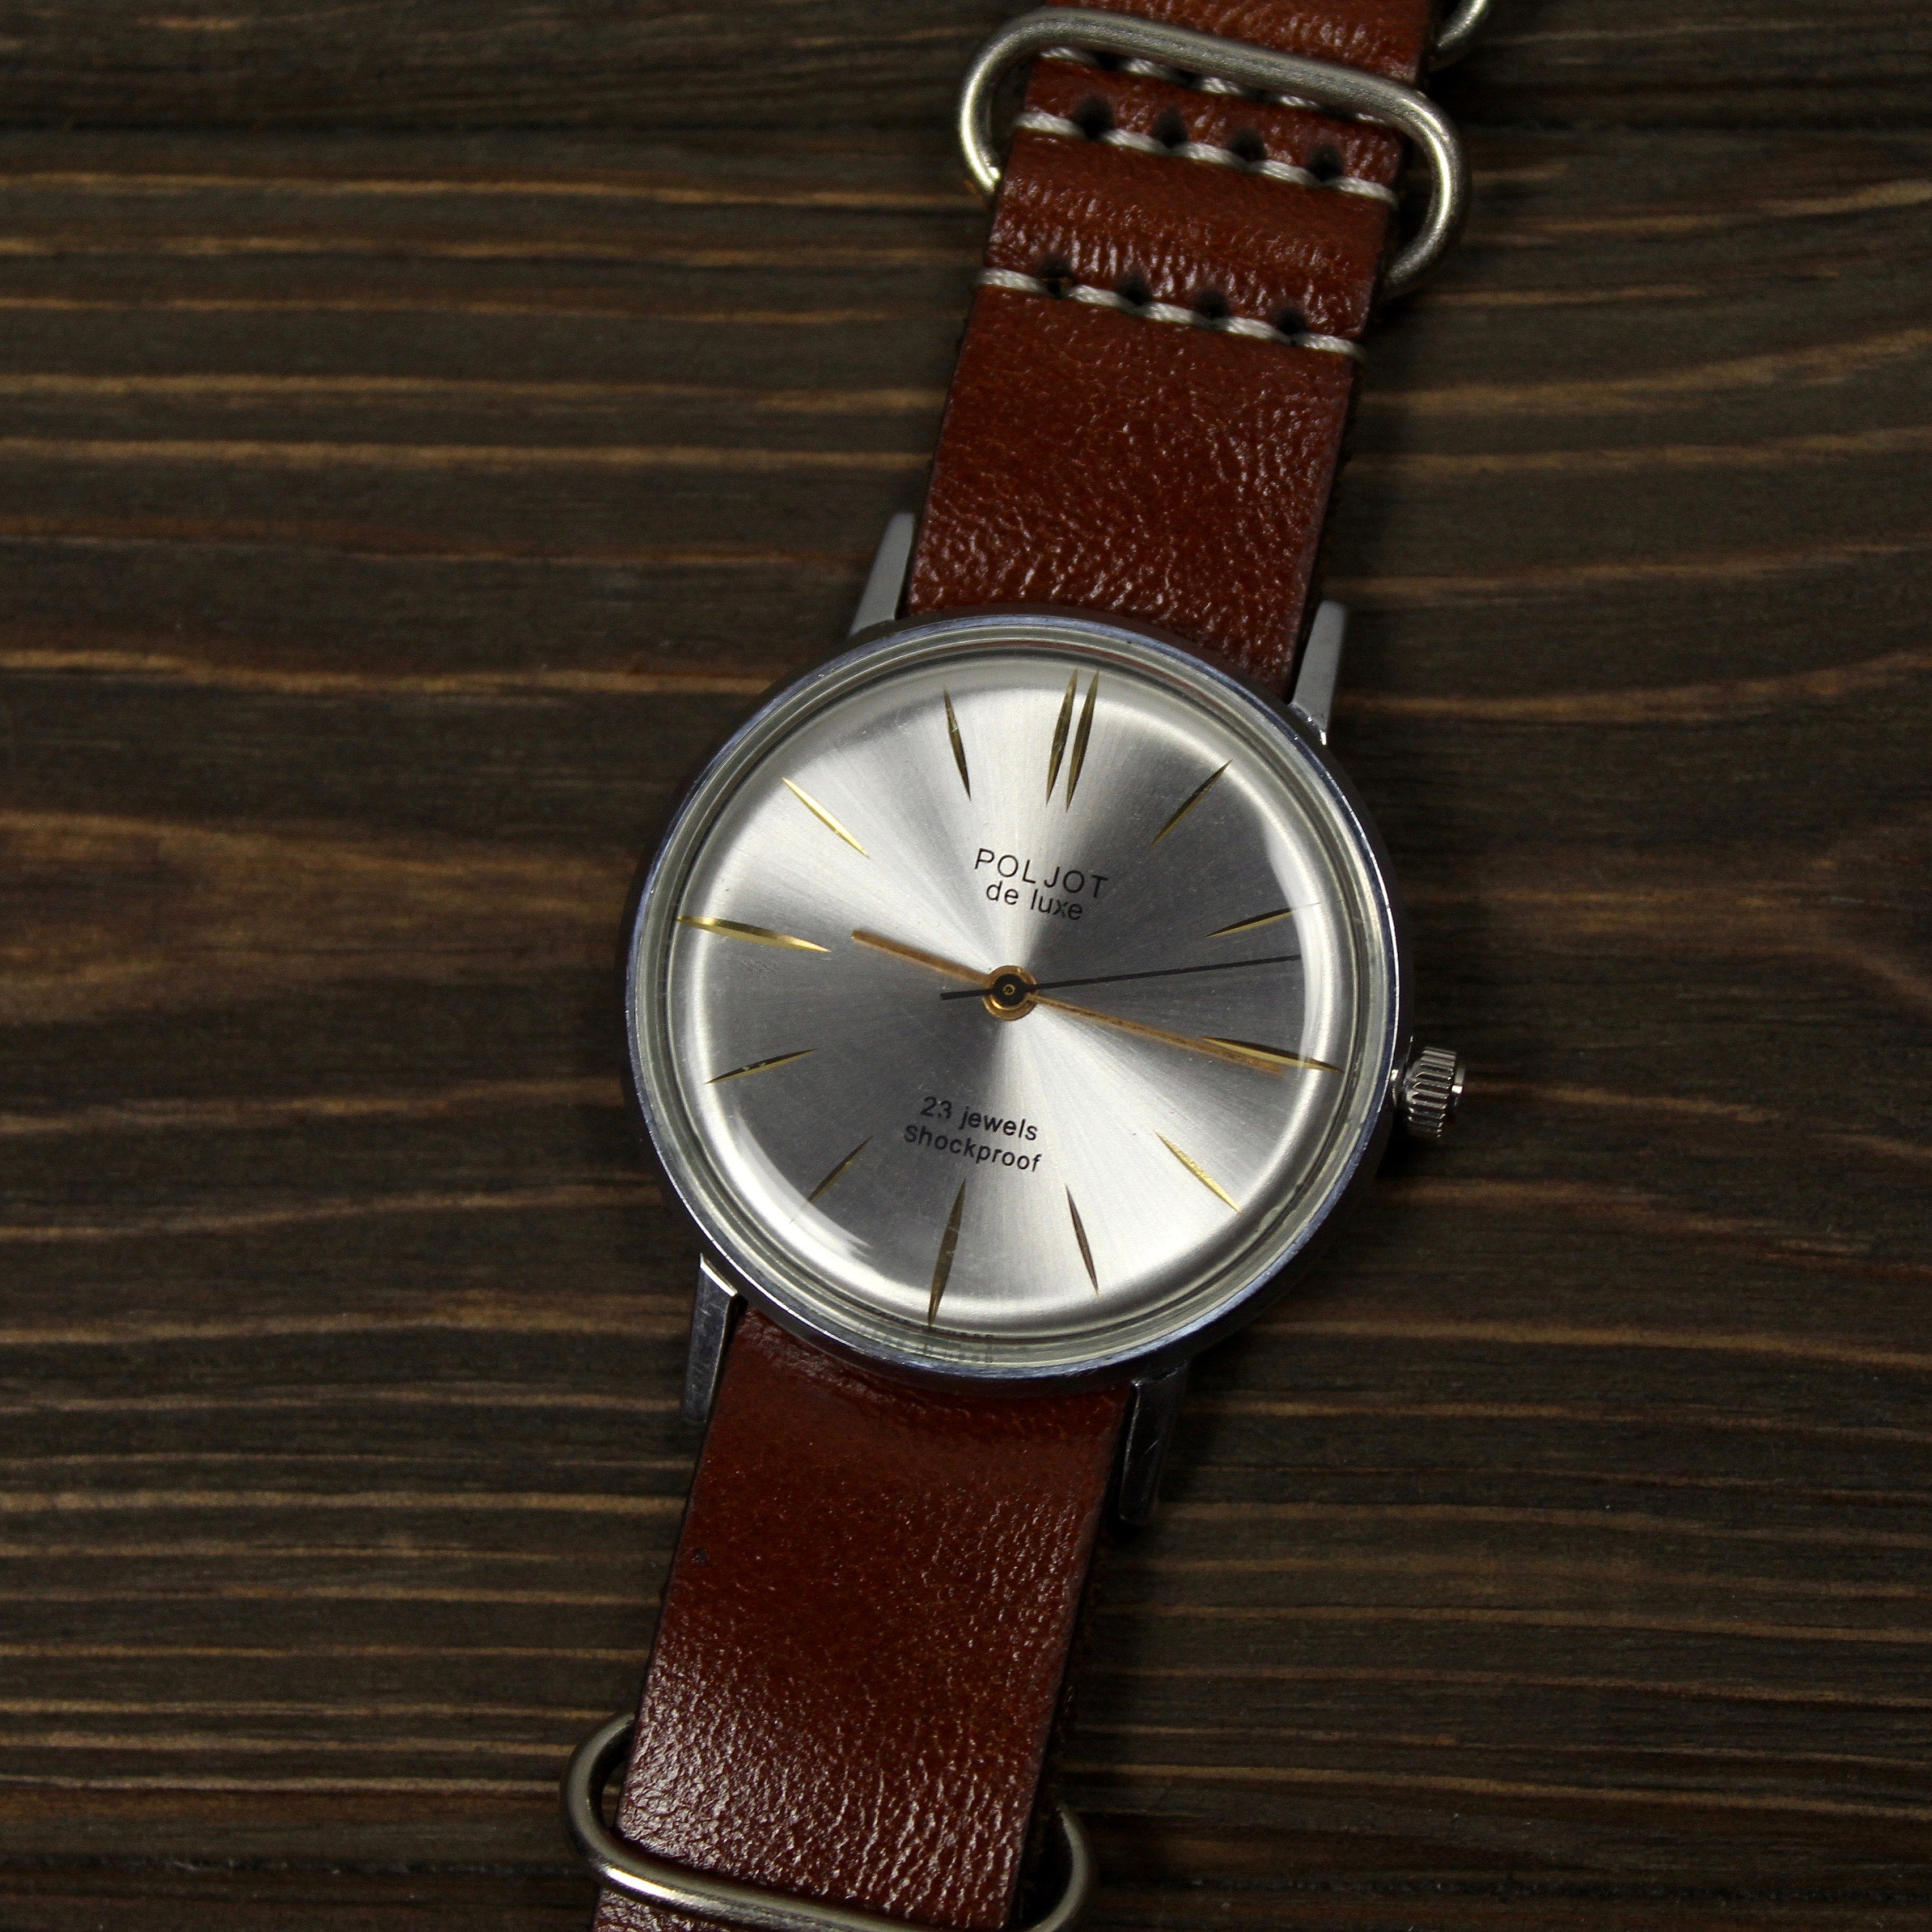 Vintage very rare soviet men's wrist watch Poljot de luxe with leather nato strap